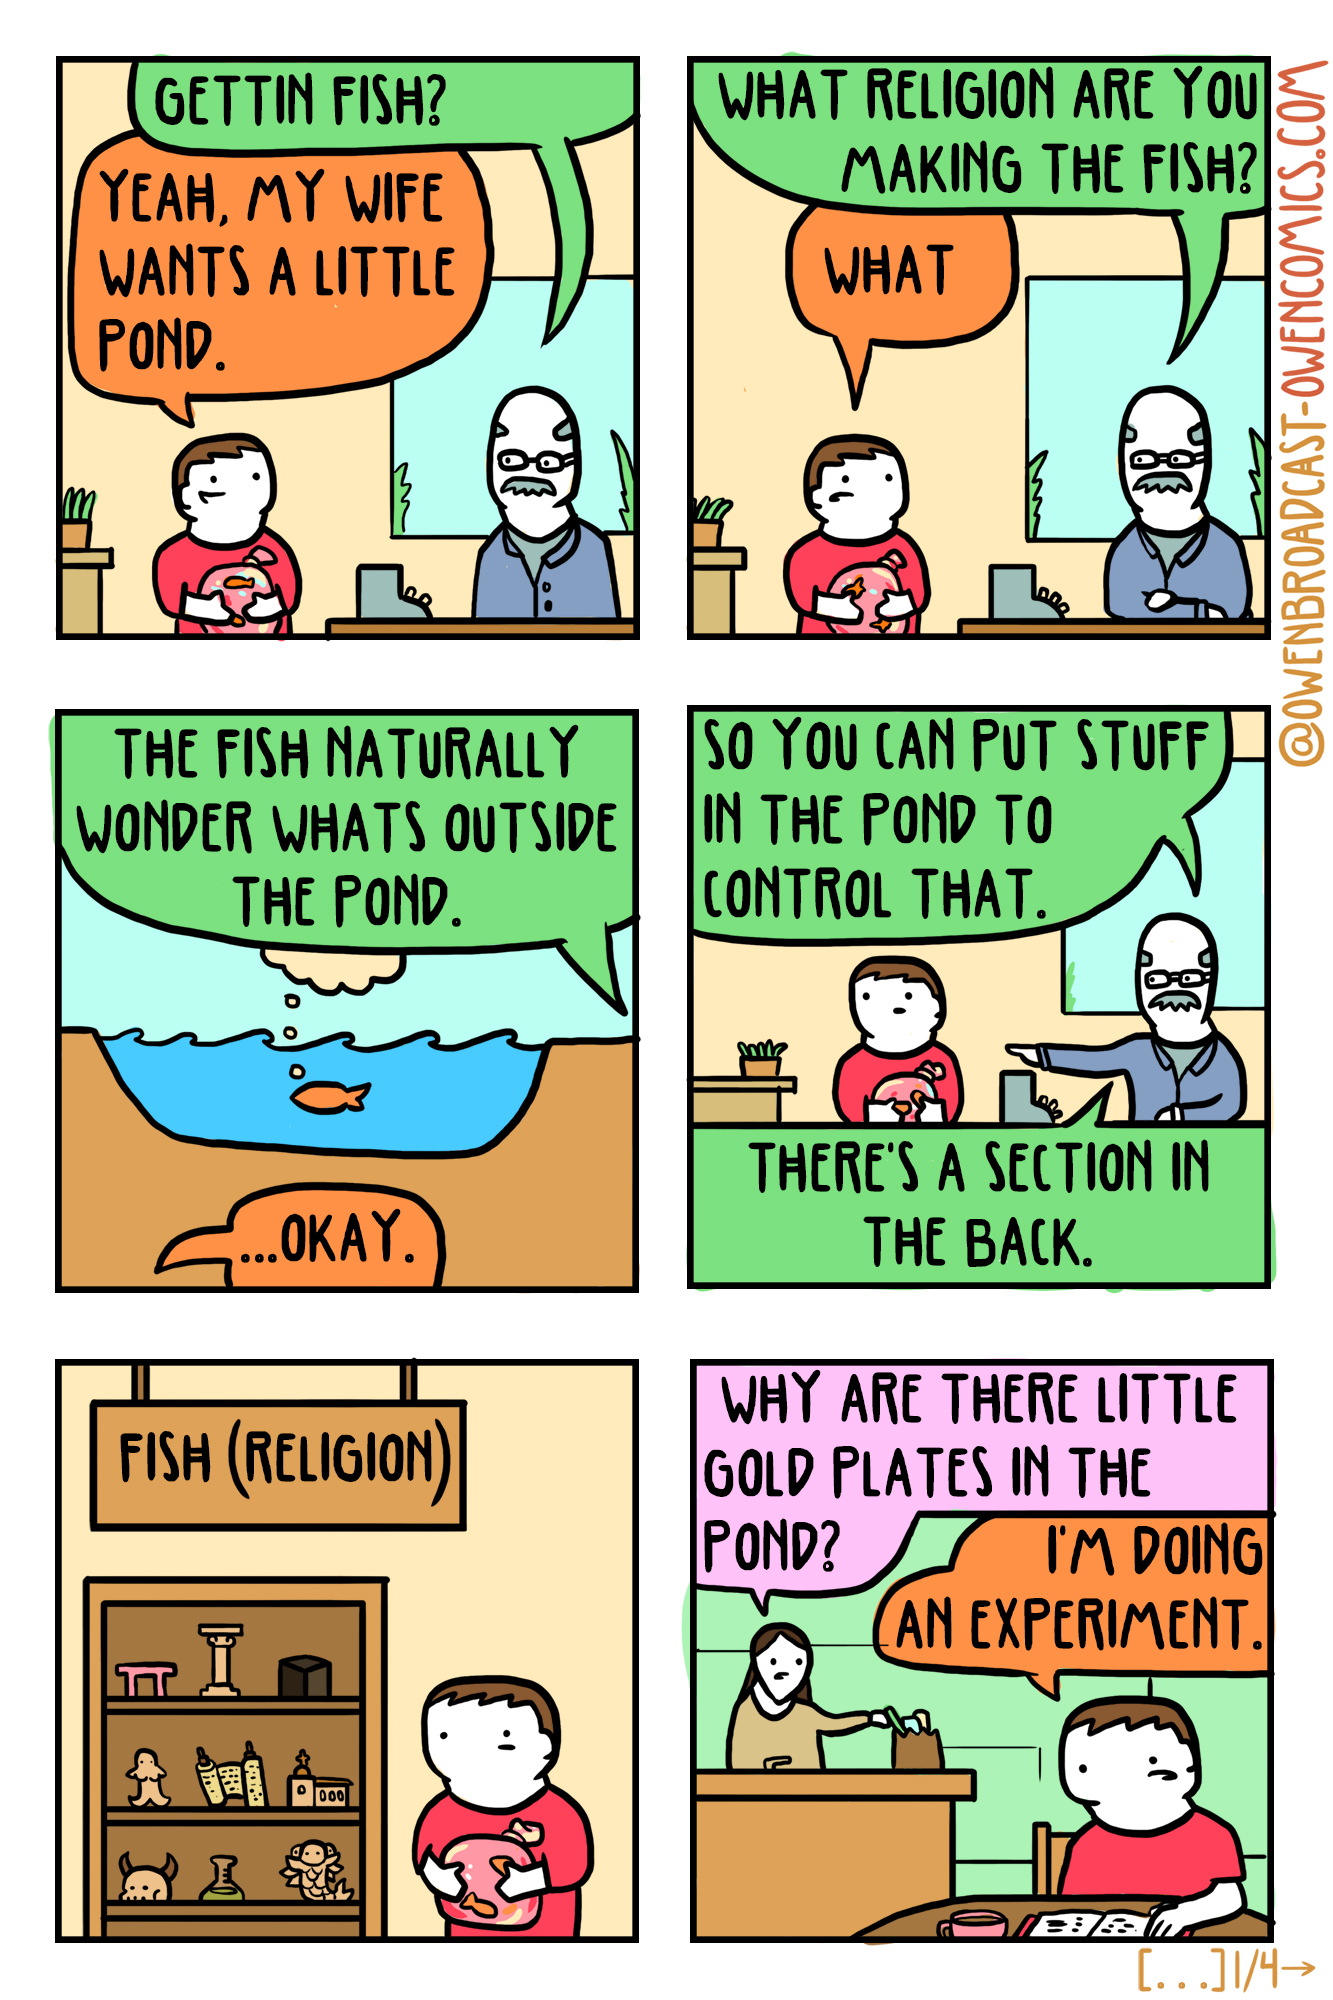 fish (1/4)